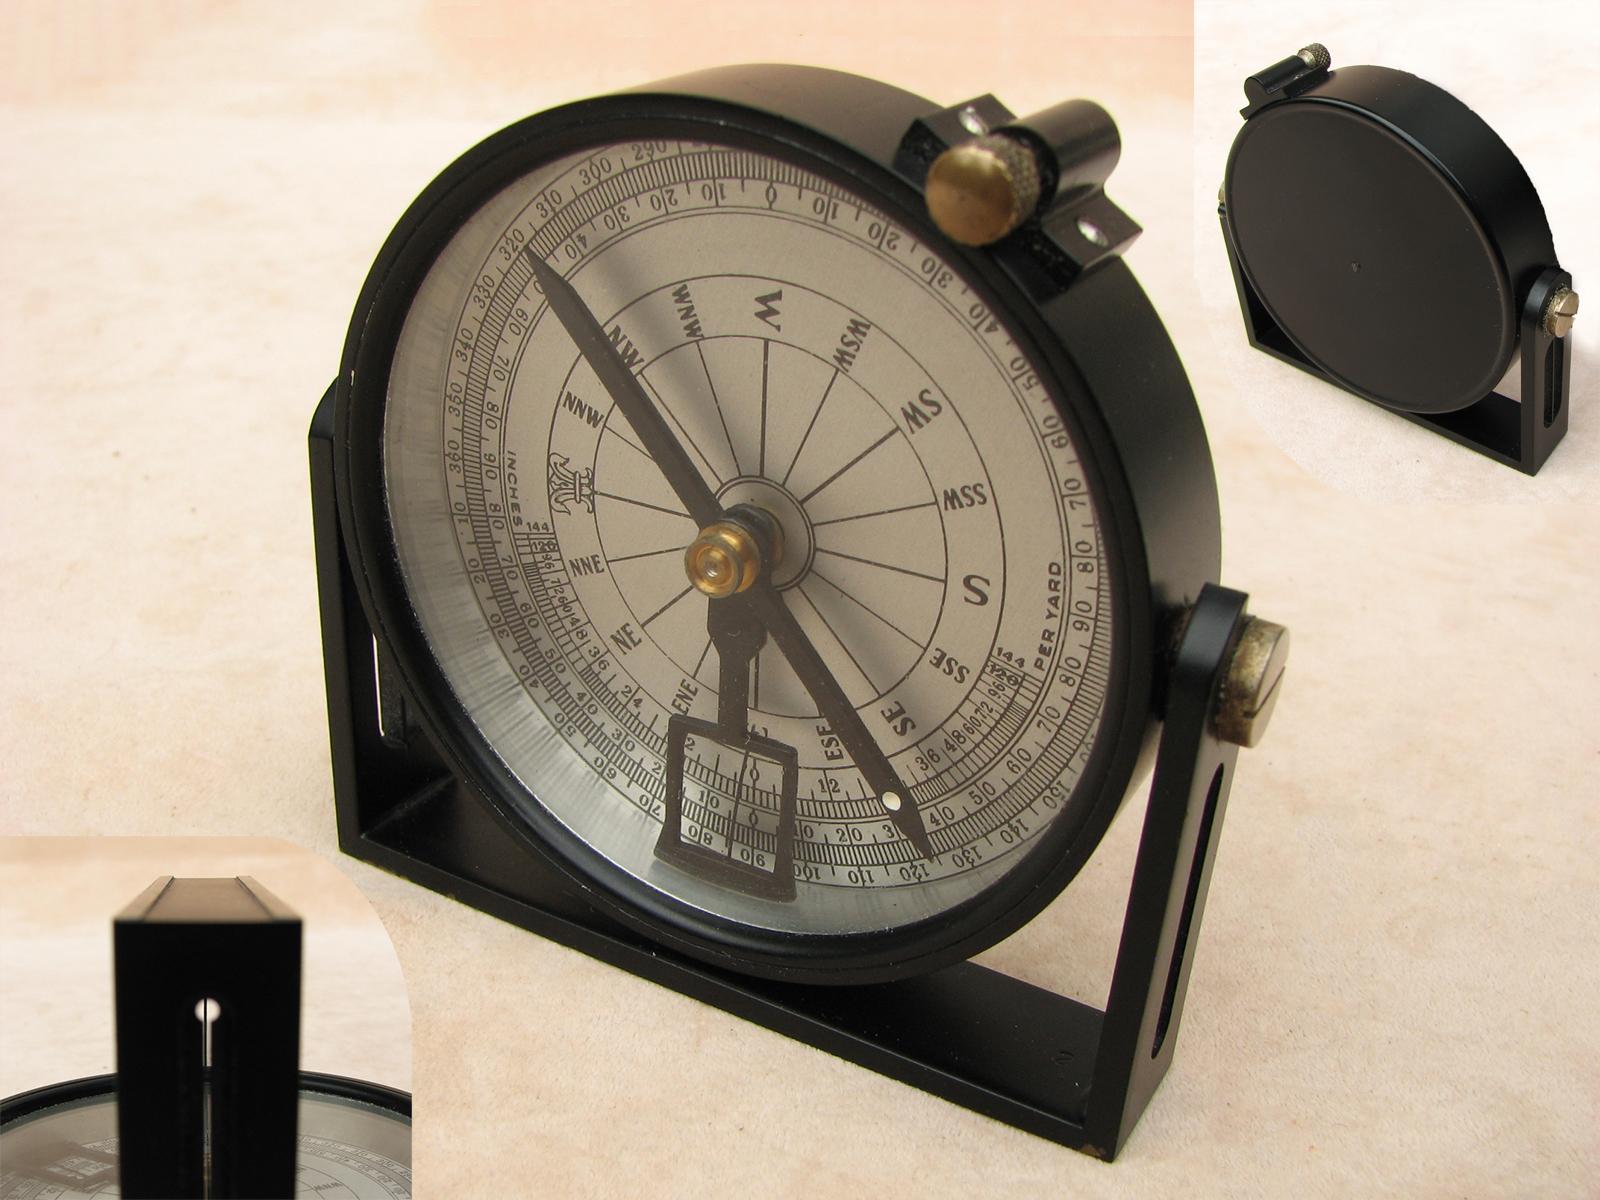 Mid 20th century Francis Barker bridge compass with clinometer